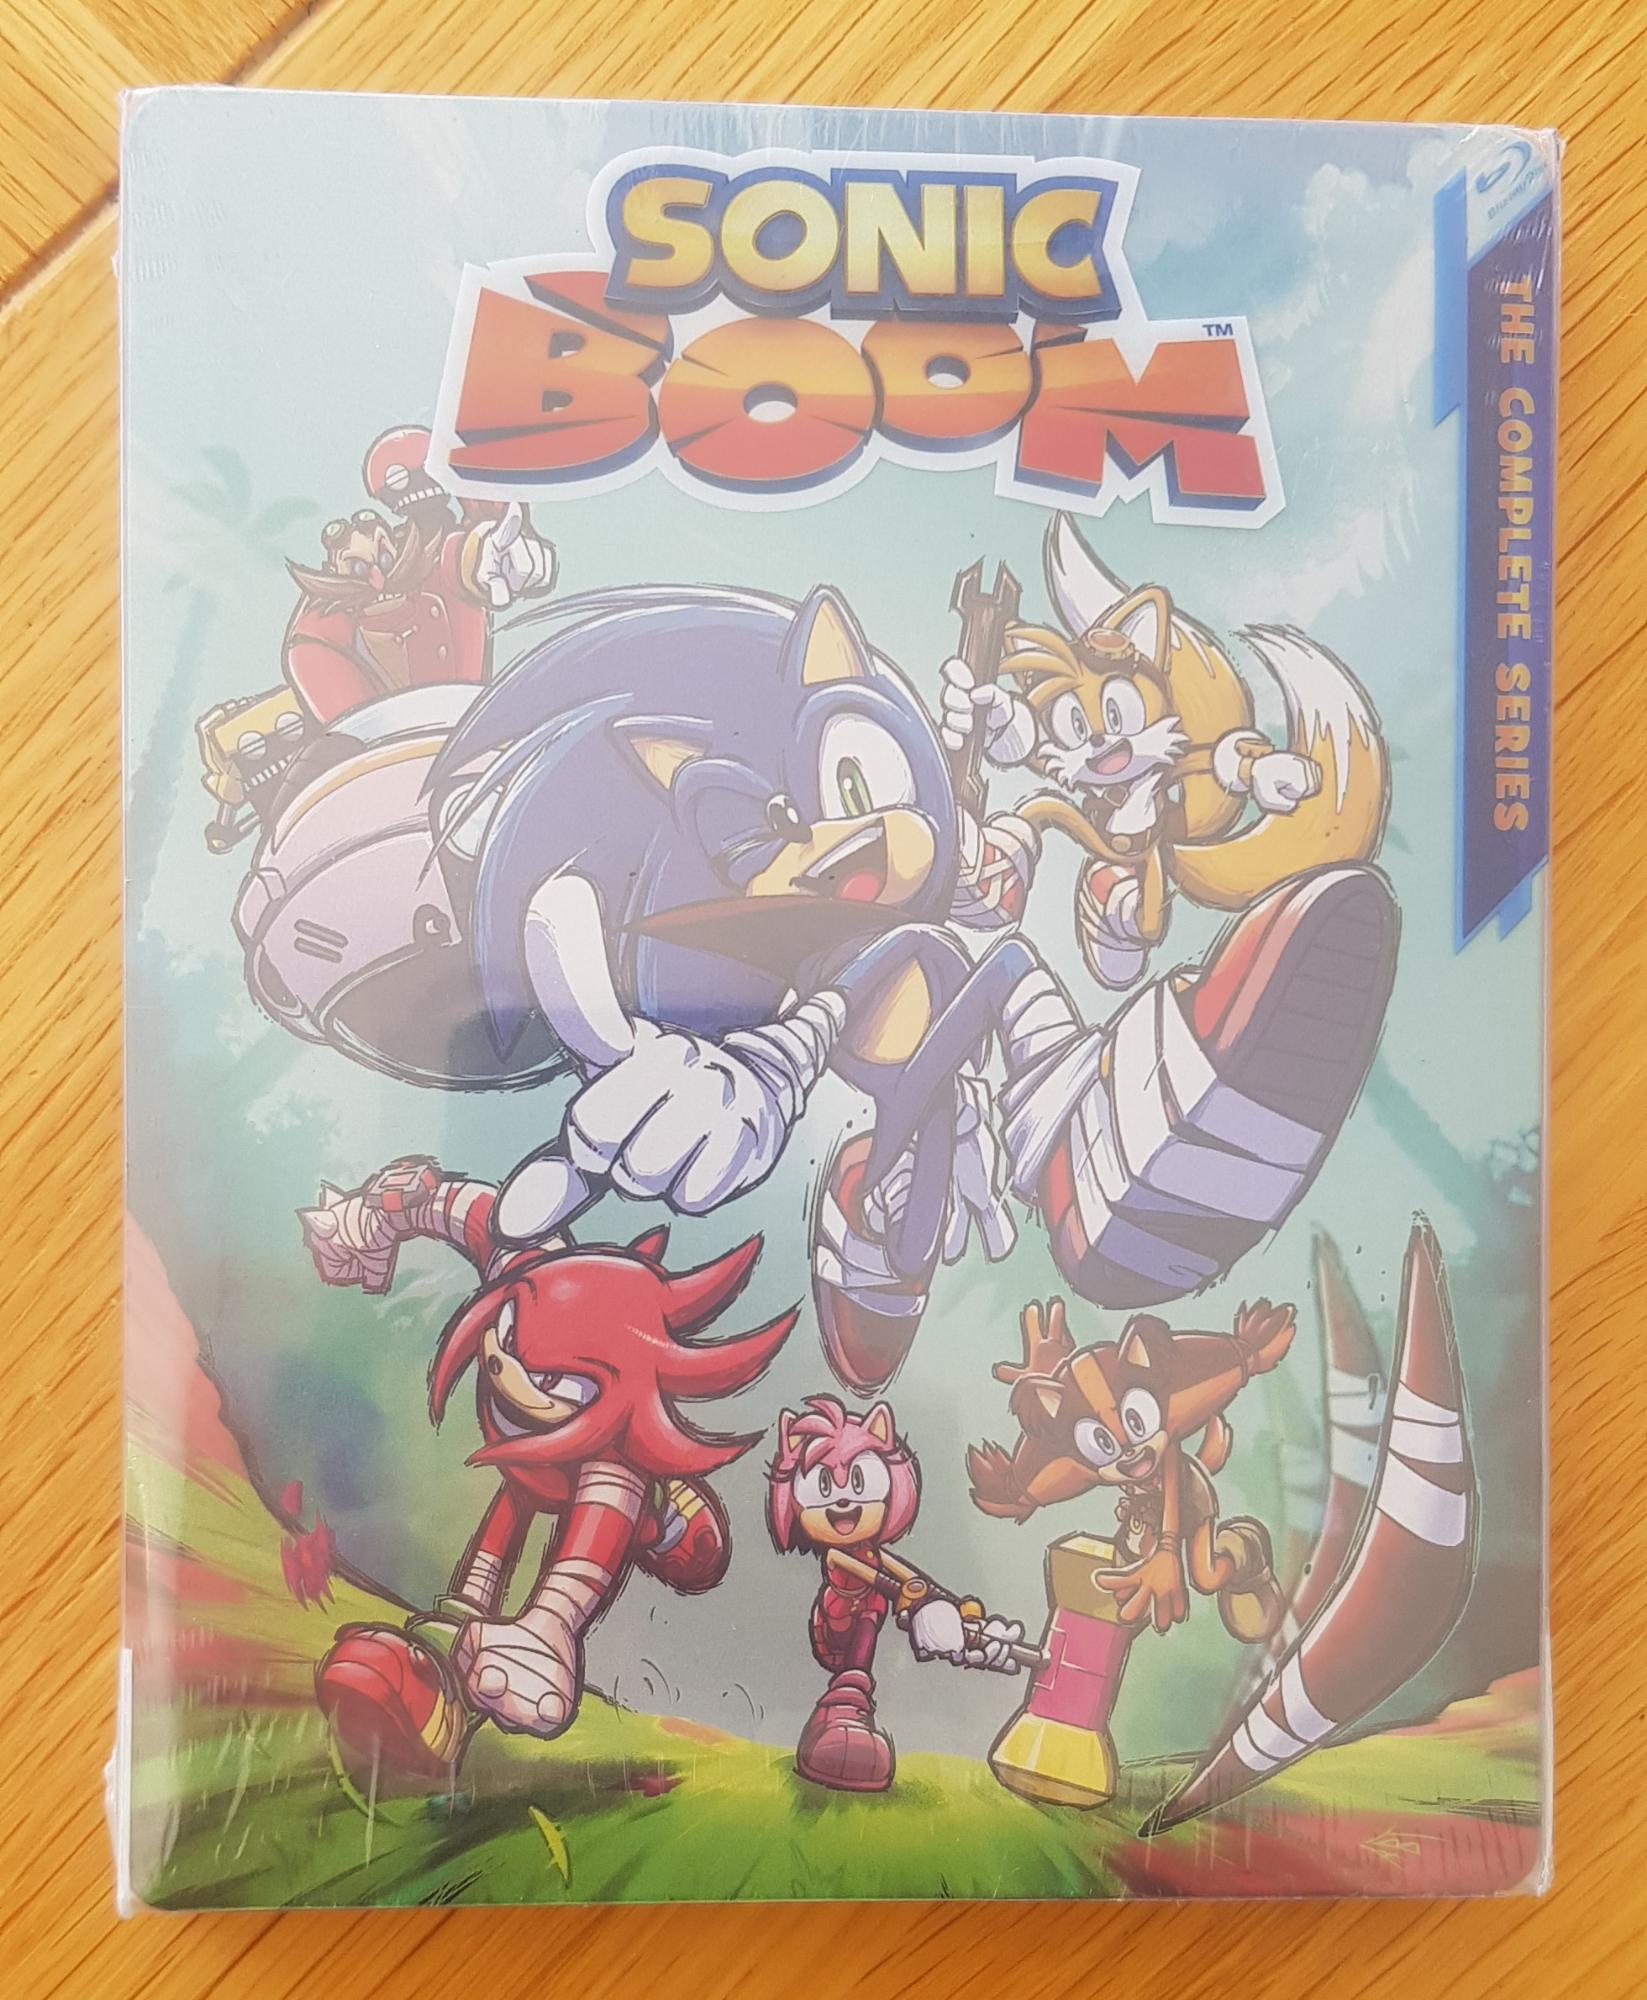 Sonic Boom: The Complete Series Blu-ray (SteelBook)